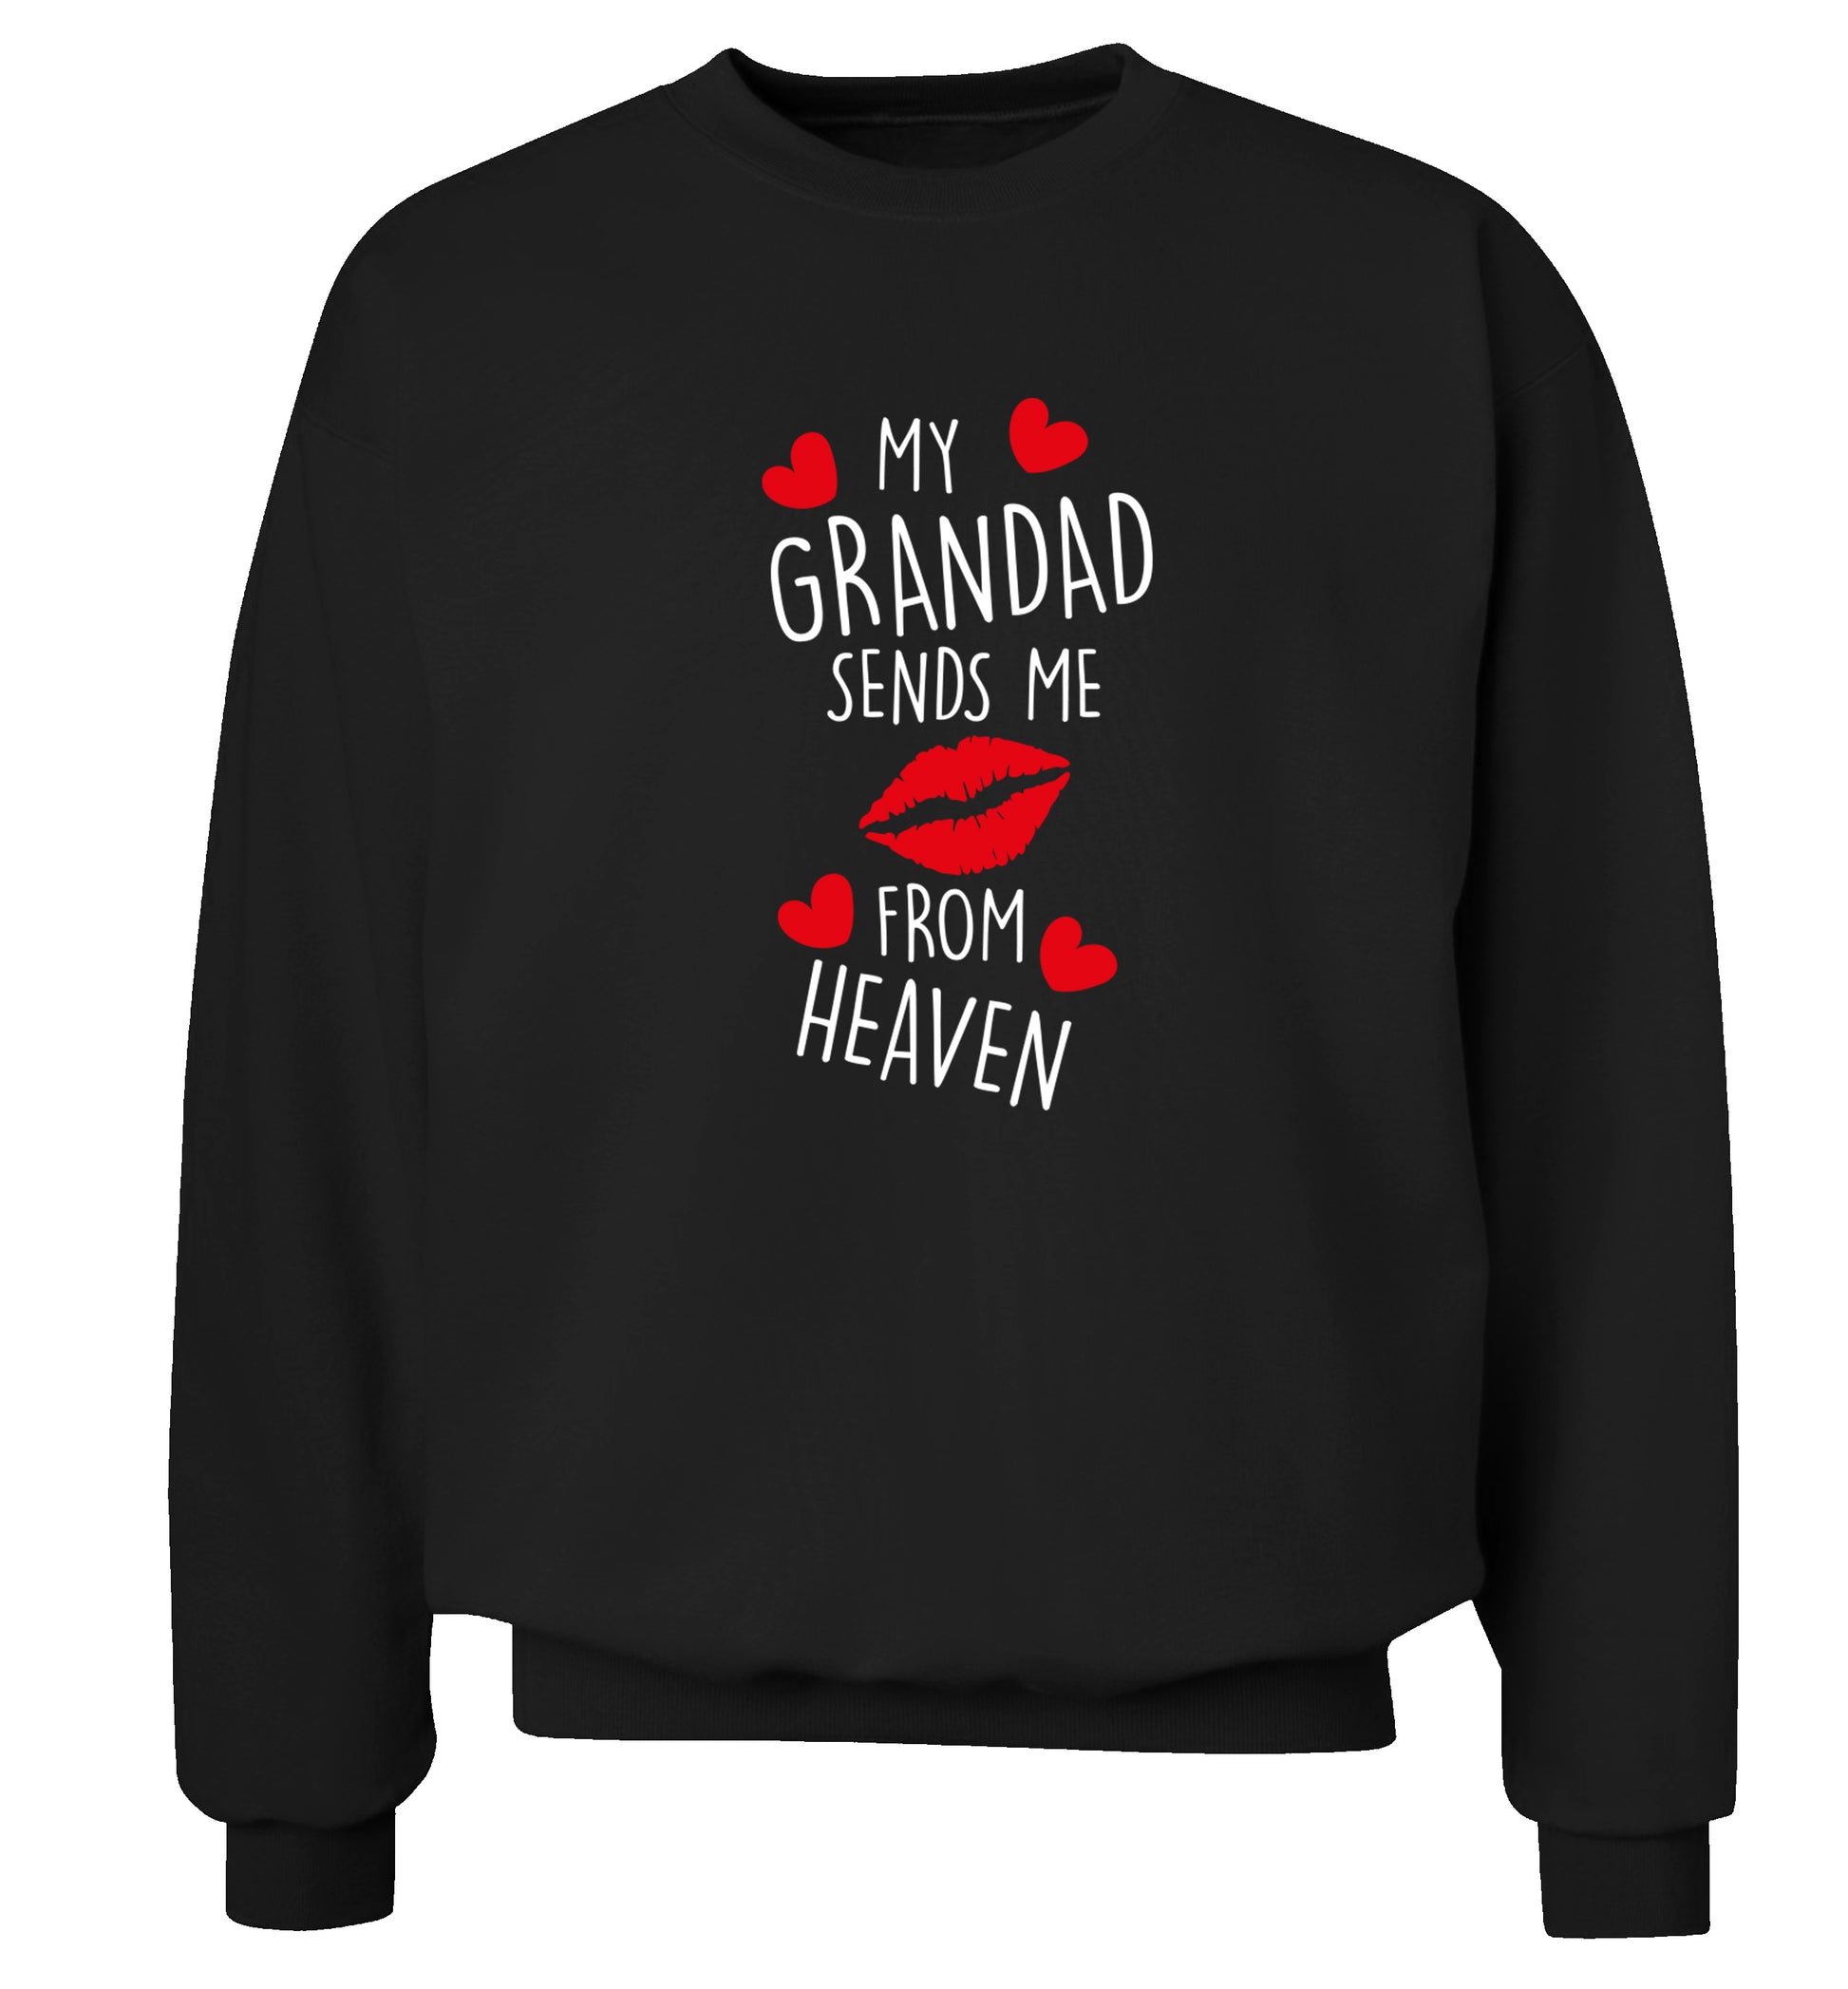 My grandad sends me kisses from heaven Adult's unisex black Sweater 2XL